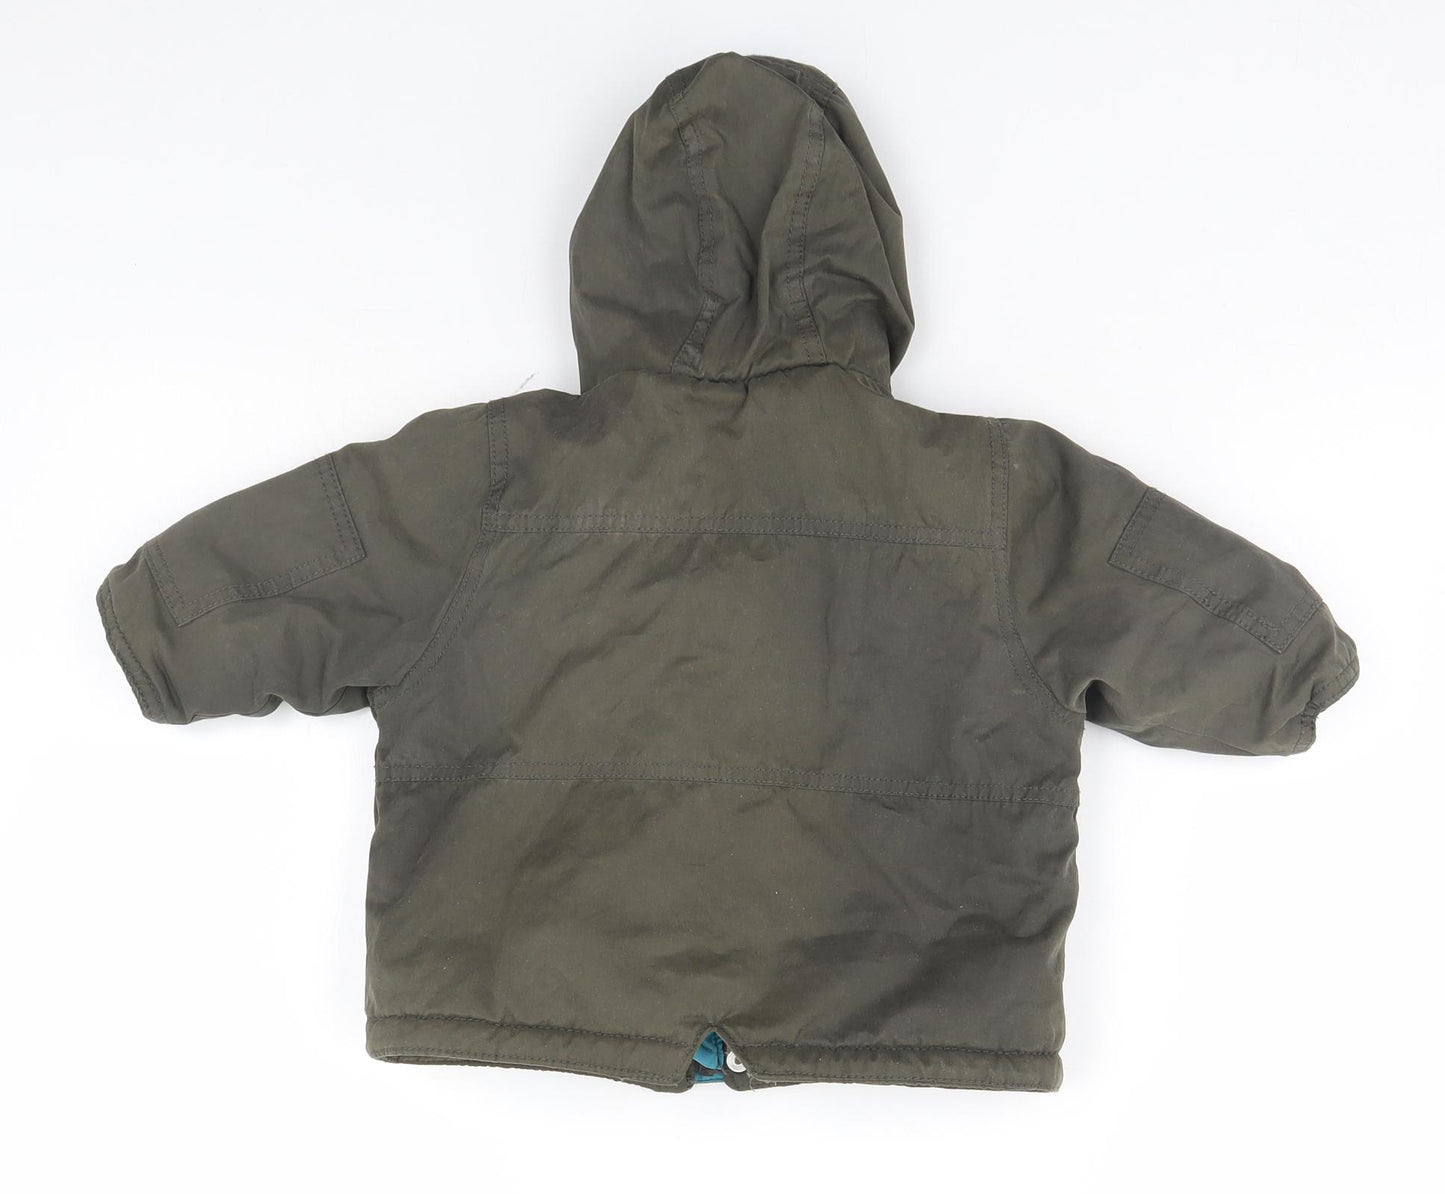 MINIMODE Baby Brown   Rain Coat Coat Size 6-9 Months